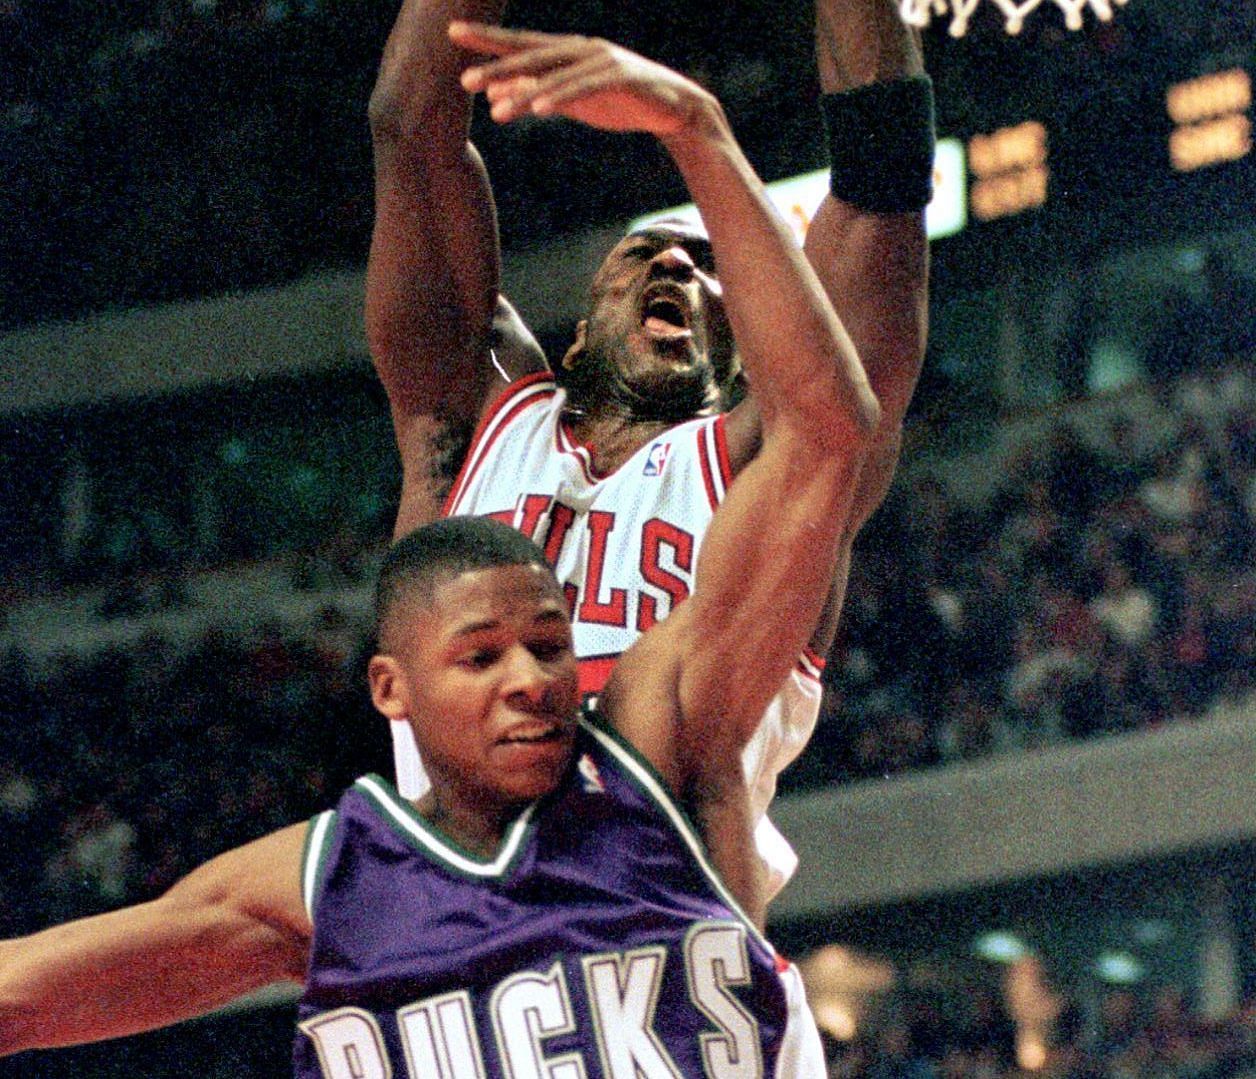 NBA Throwback - Michael Jordan vs Ray Allen